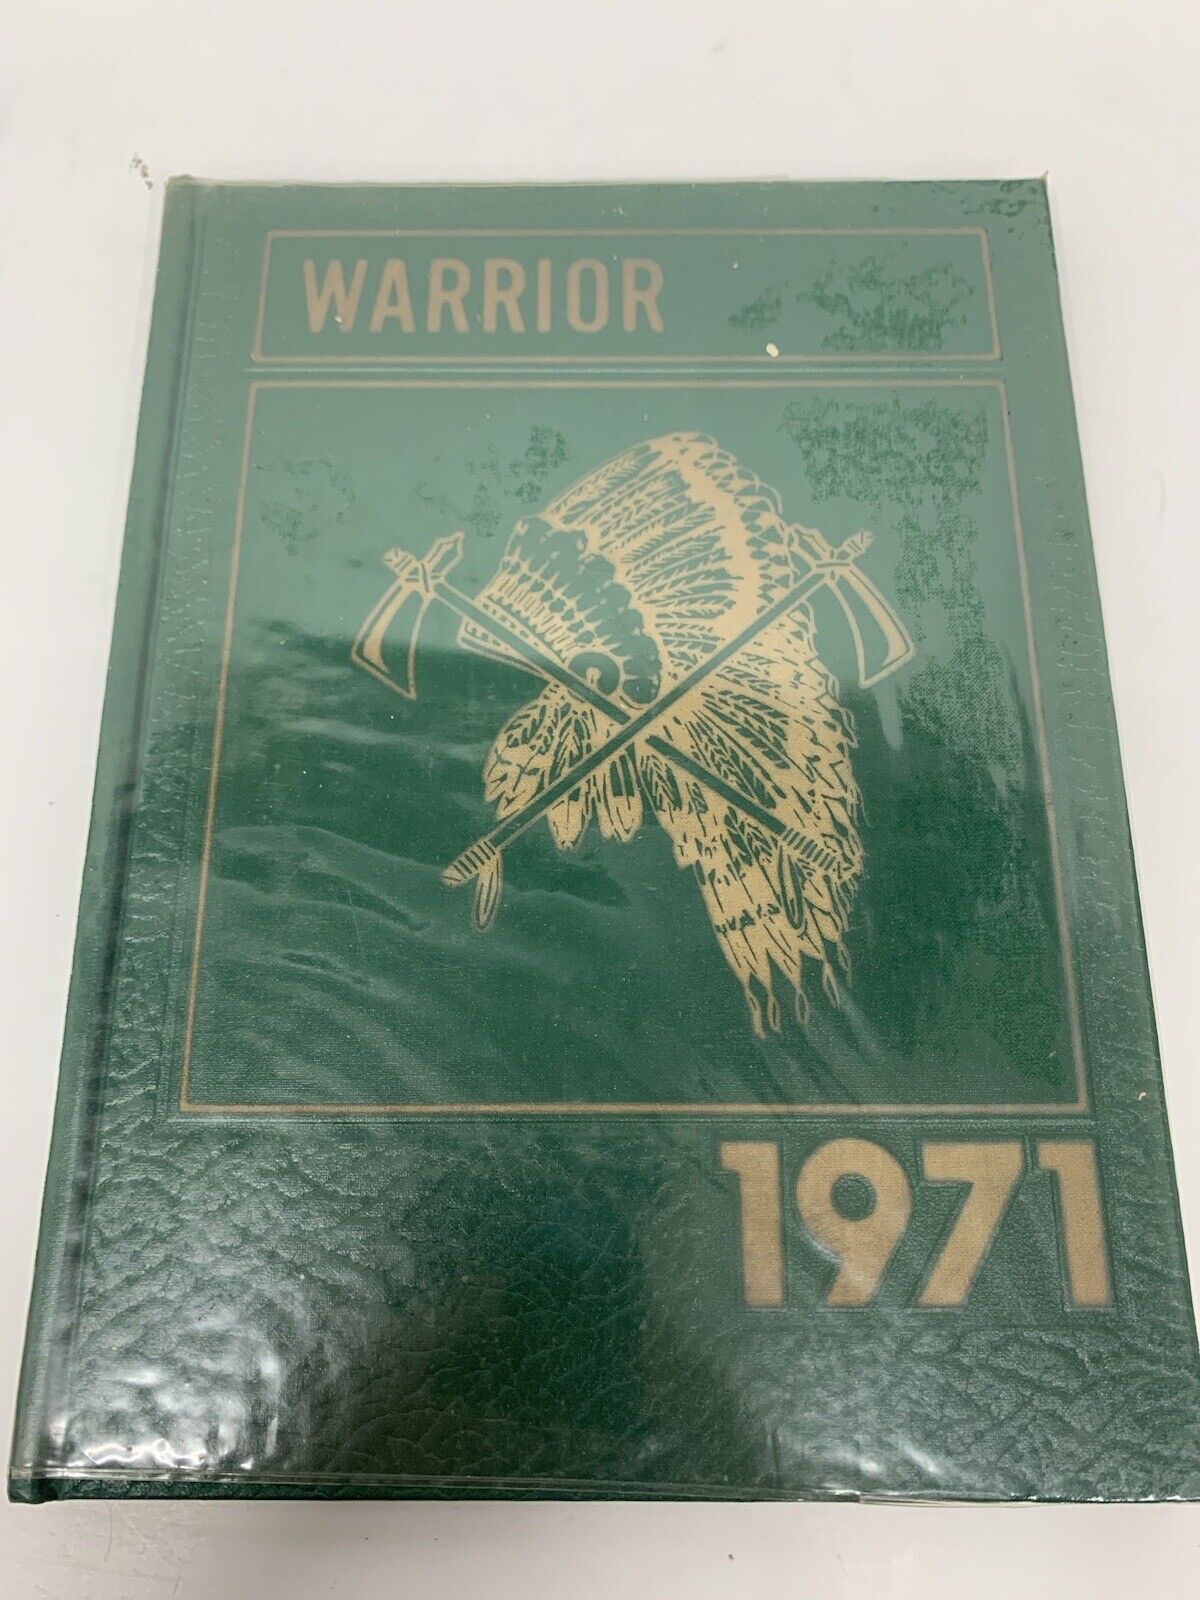 western oaks junior high putnam city Bethany Oklahoma 1971 Warrior Yearbook